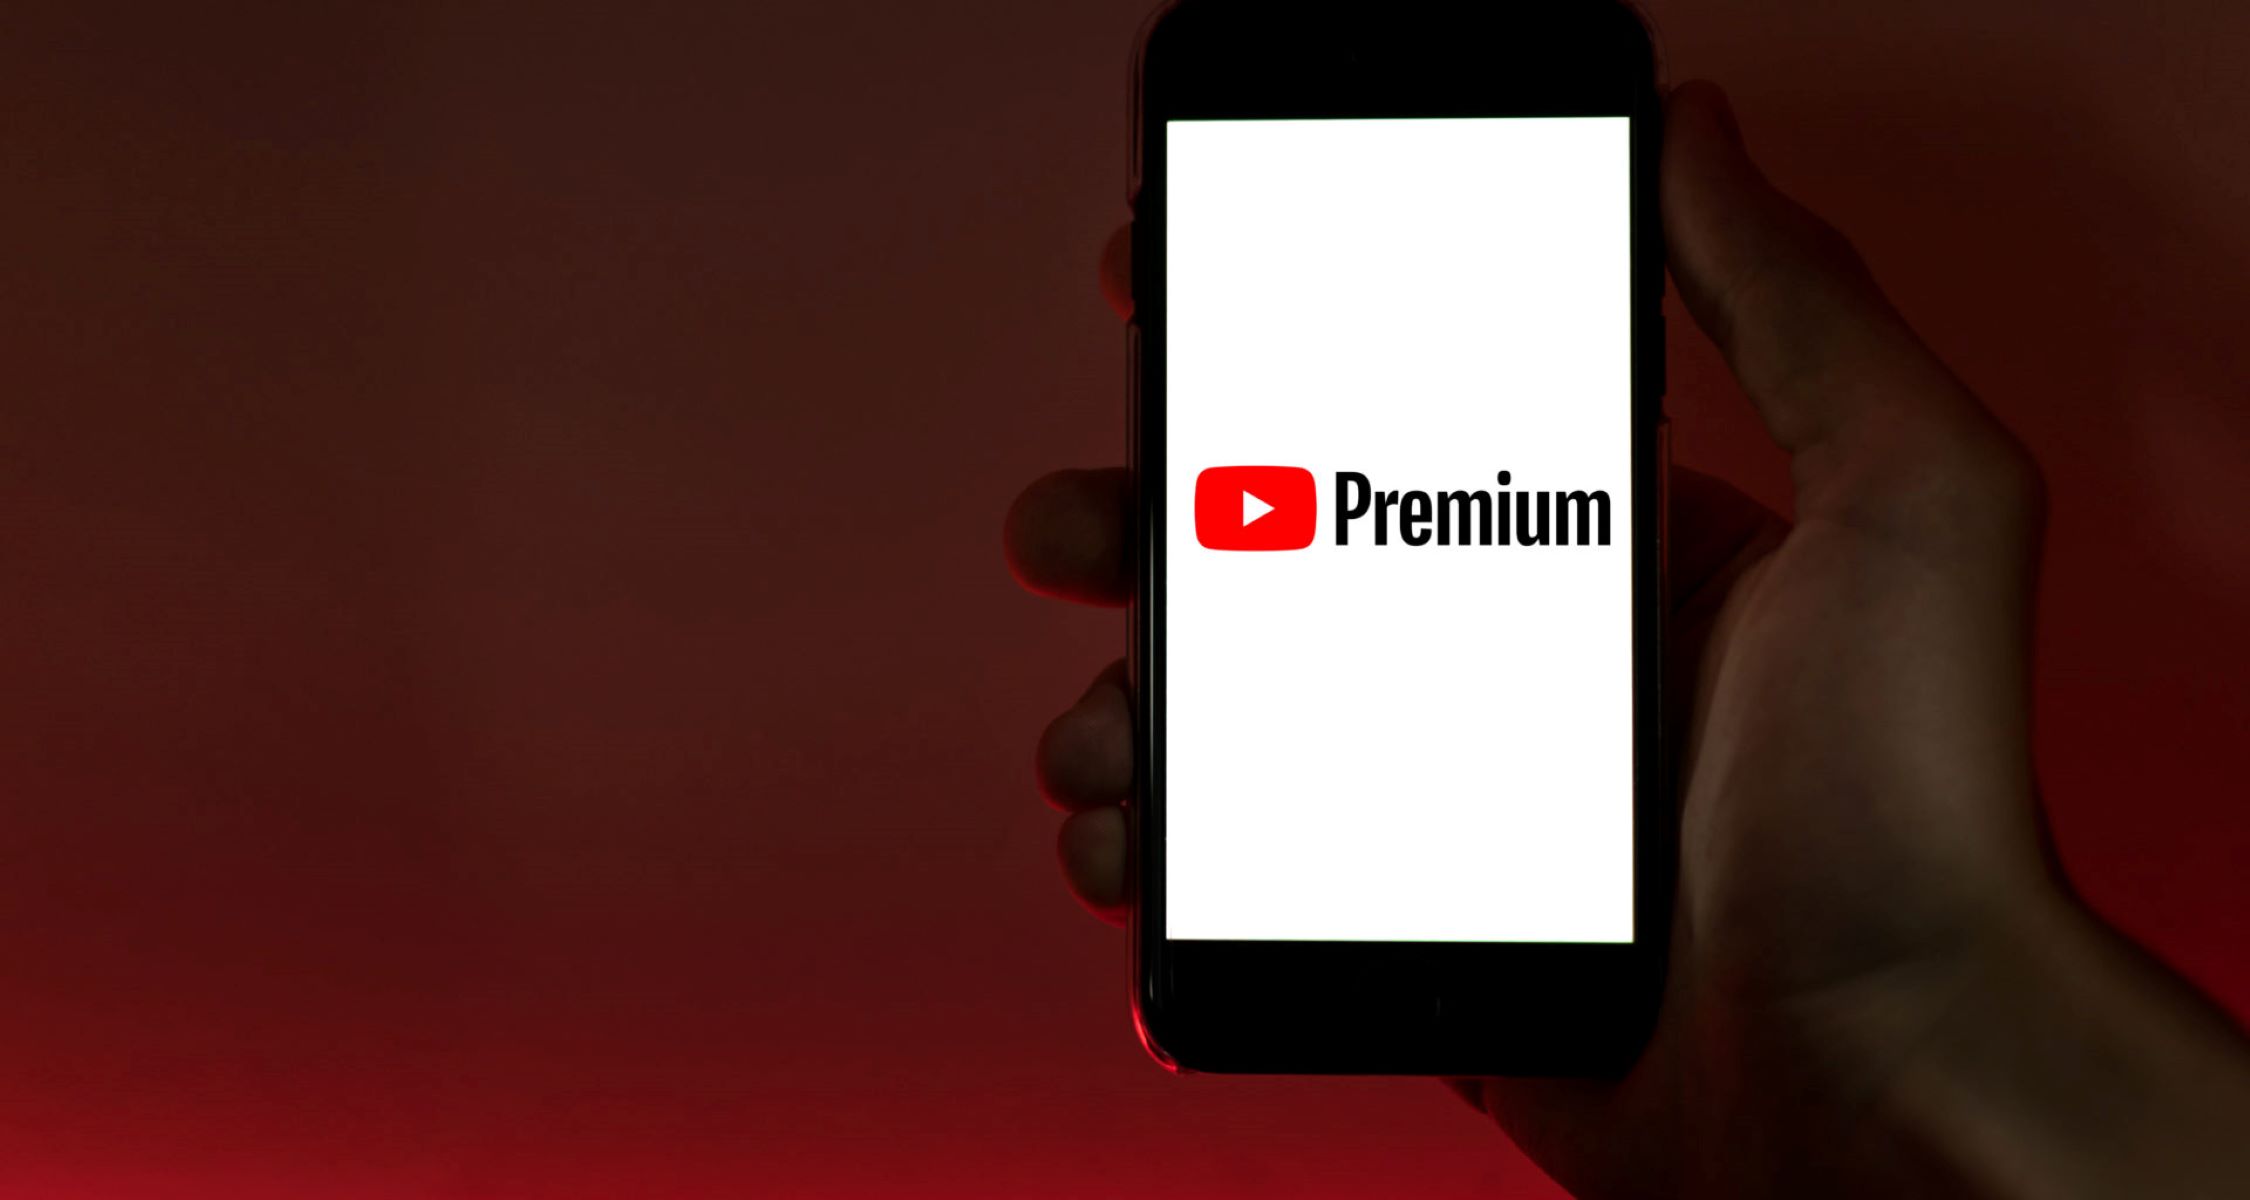 How Do I Get Youtube Premium For Free?